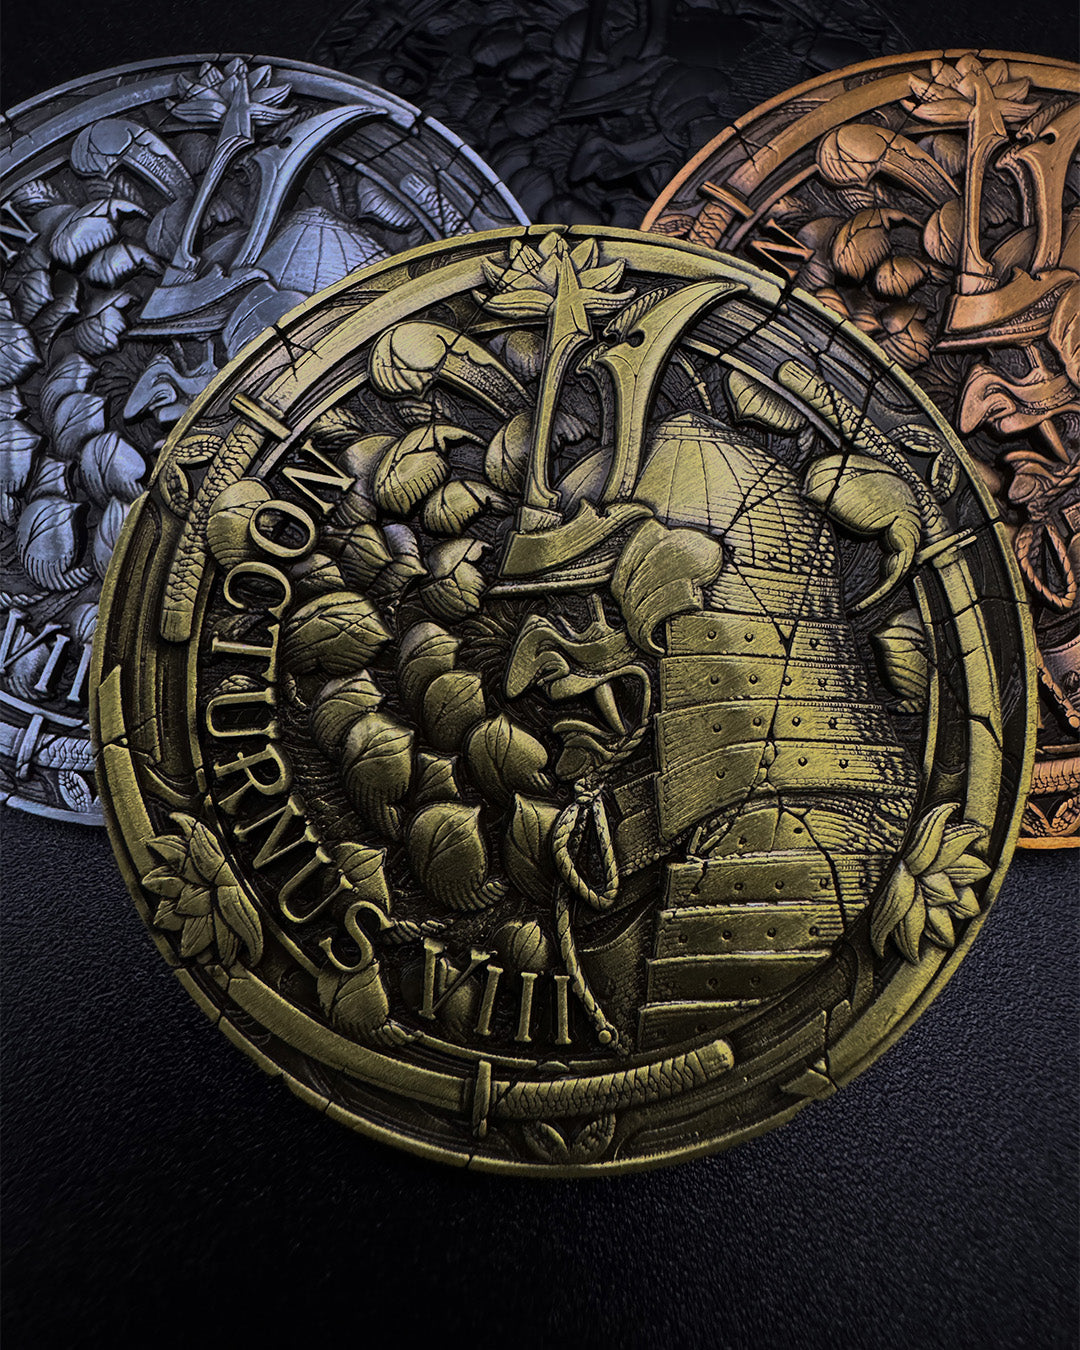 Death awaits VIII - Collectors Edition - Limitiert 20 - Coin